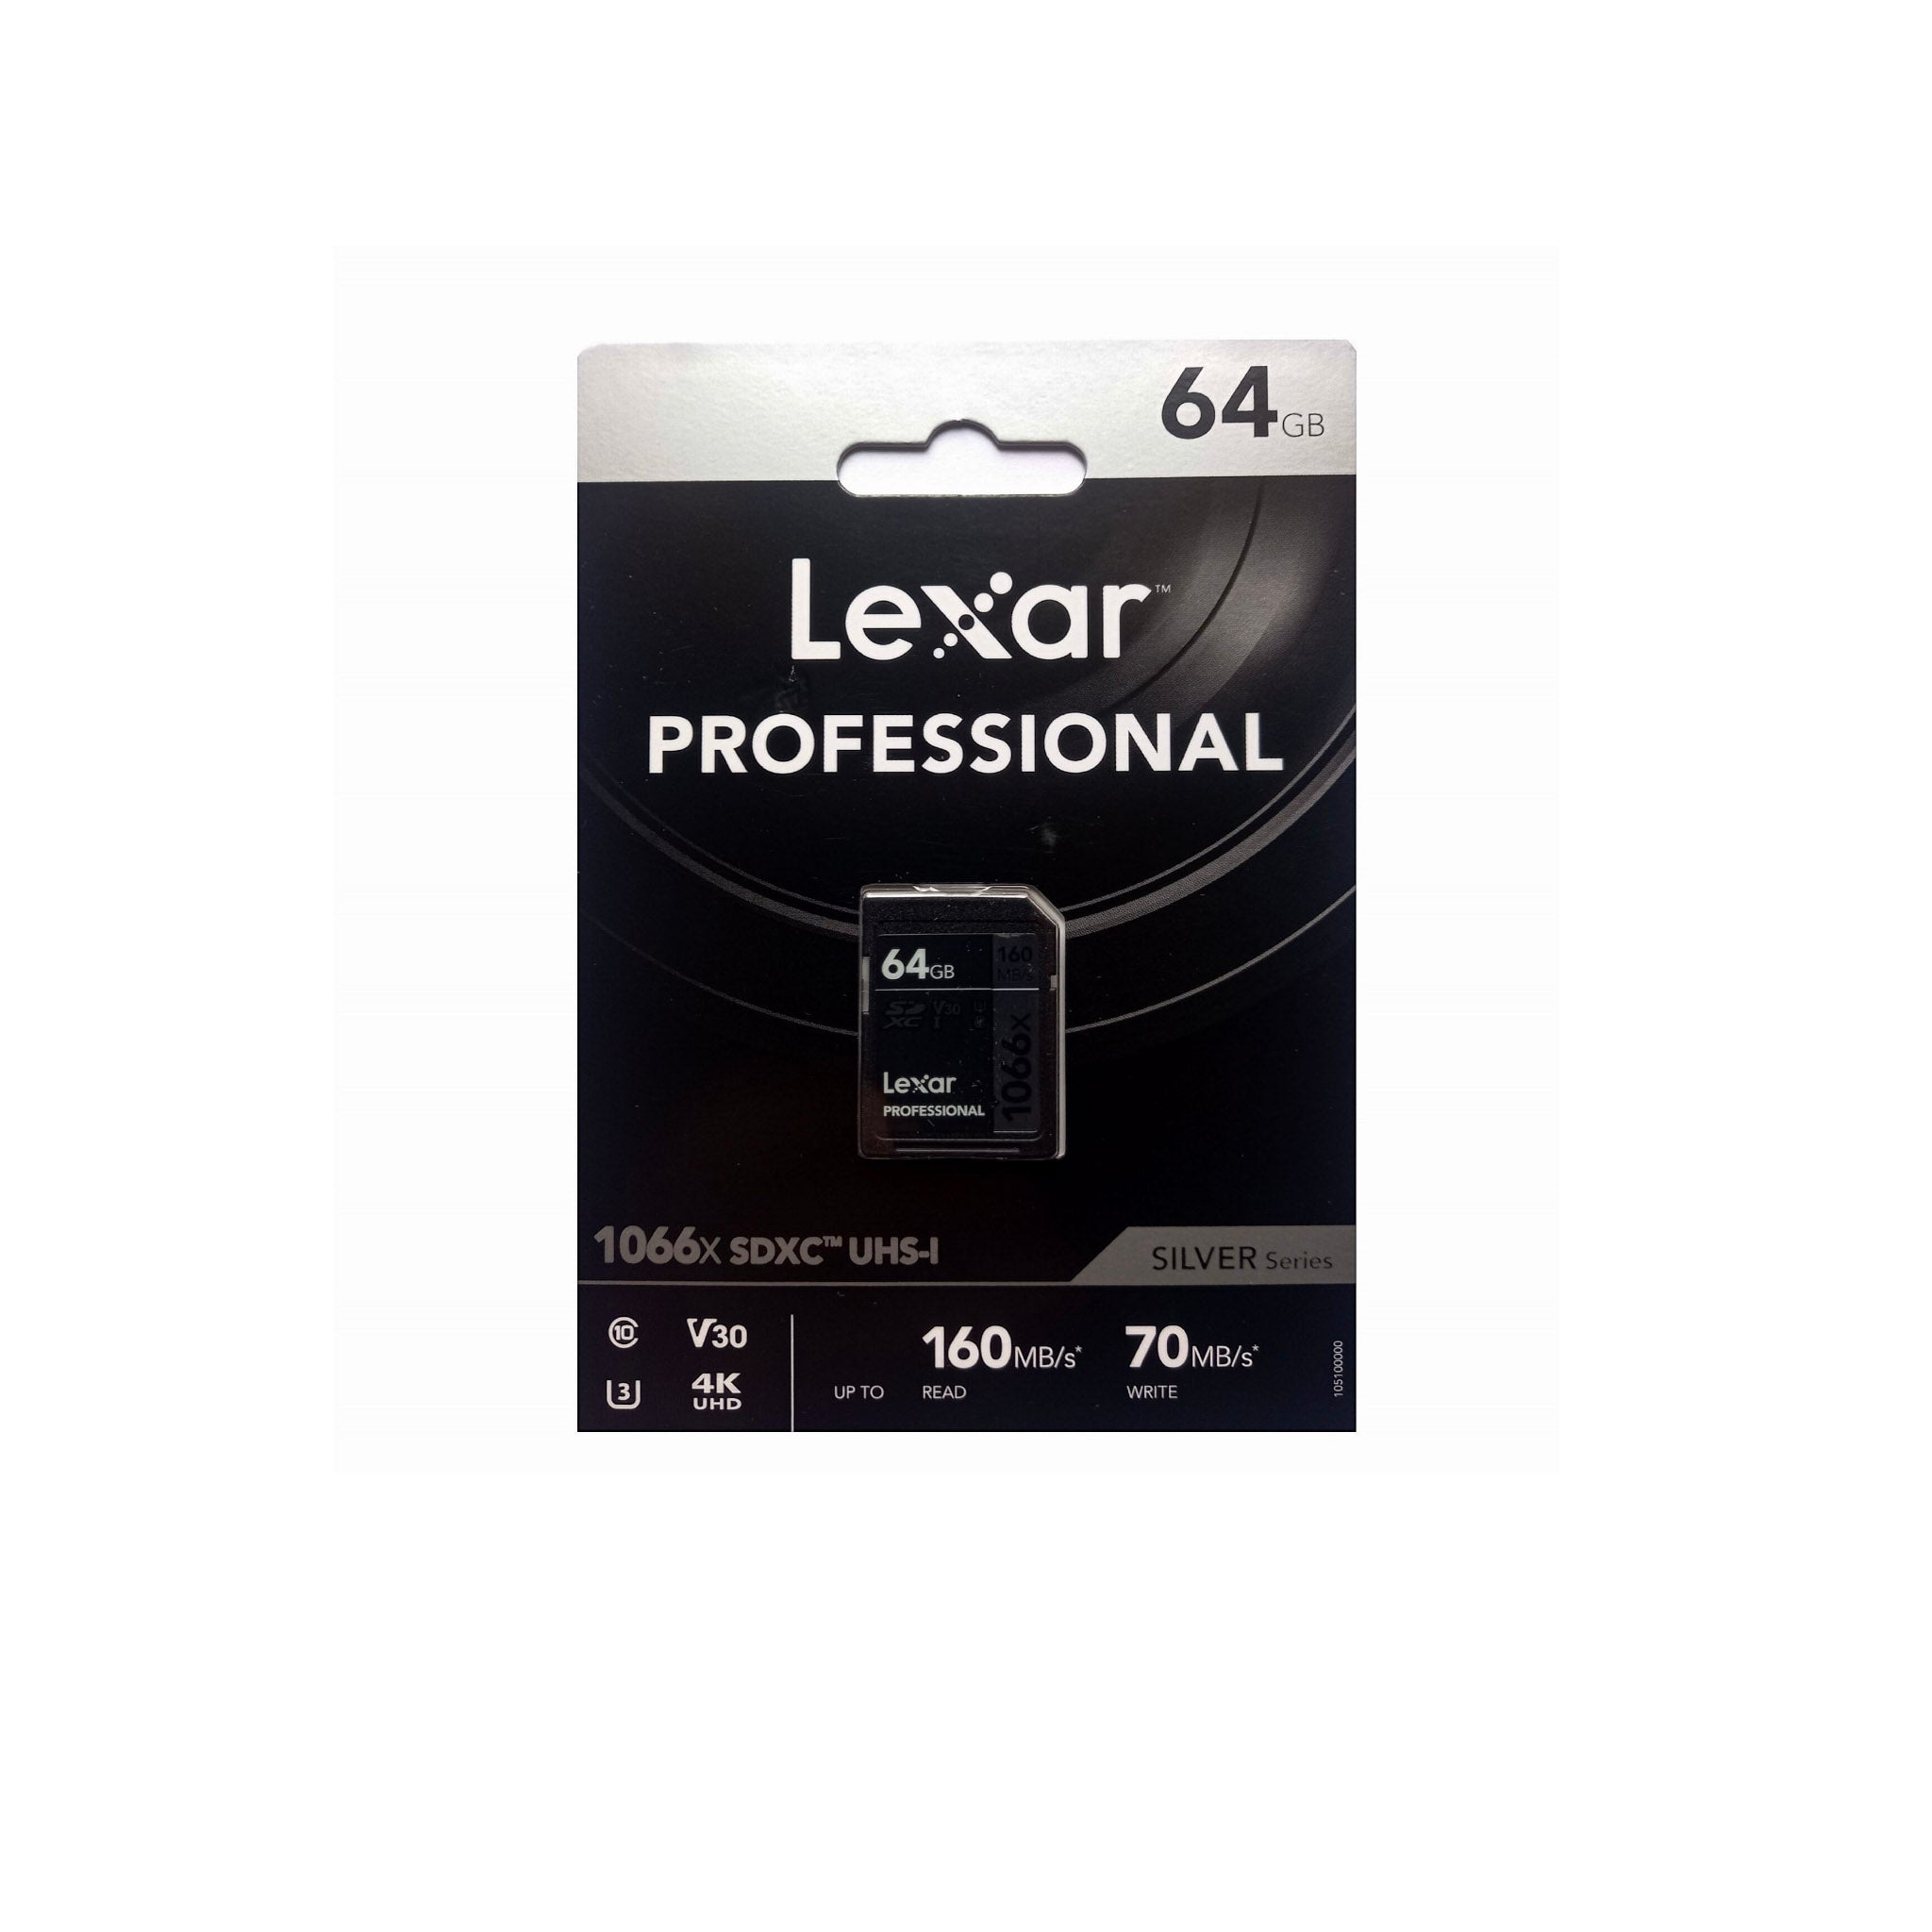 Lexar 64 GB SDXC Card Professional UHS-1 (Silver Series)